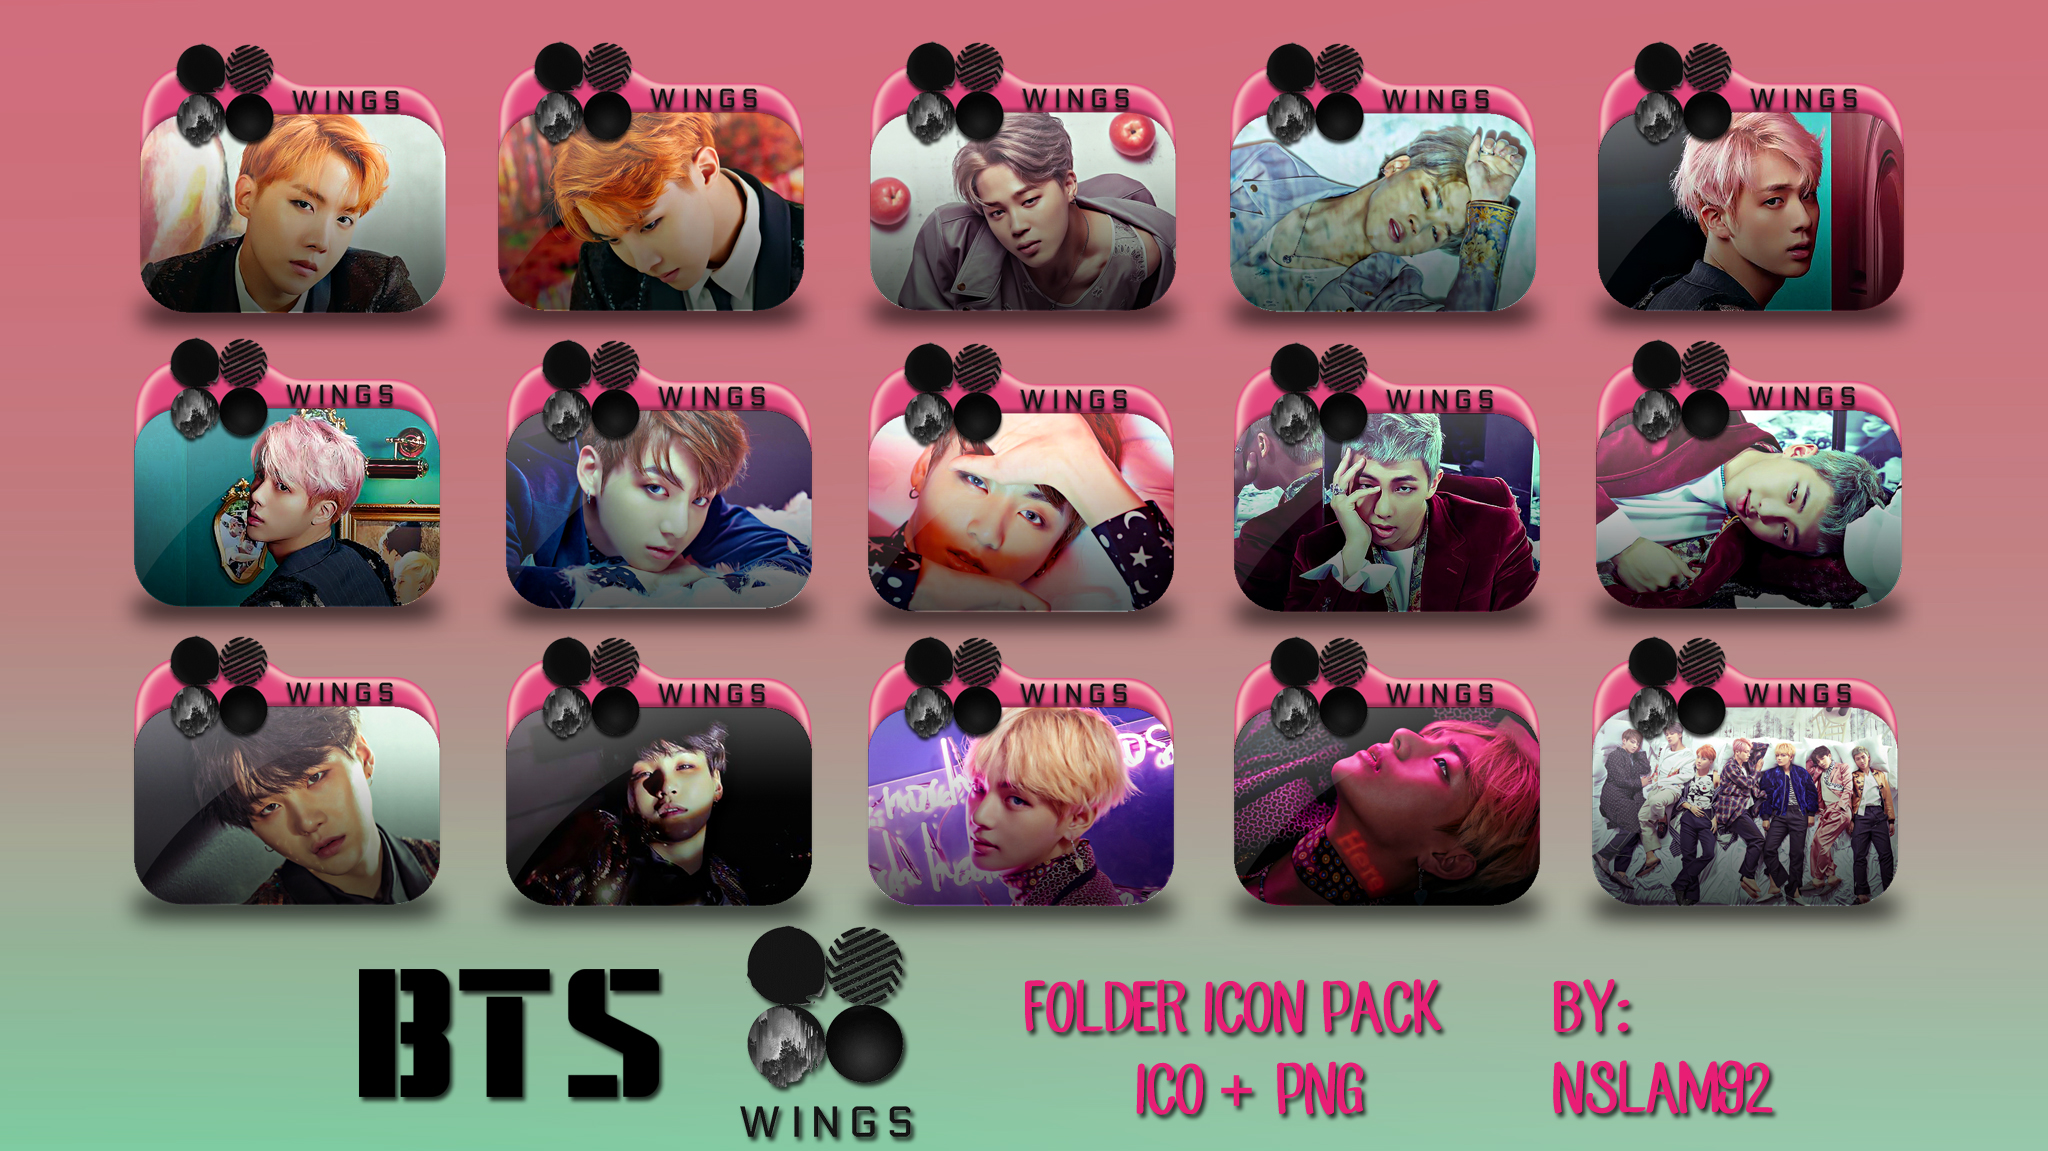 BTS Wings Folder Icon Pack By Nslam92 On DeviantArt